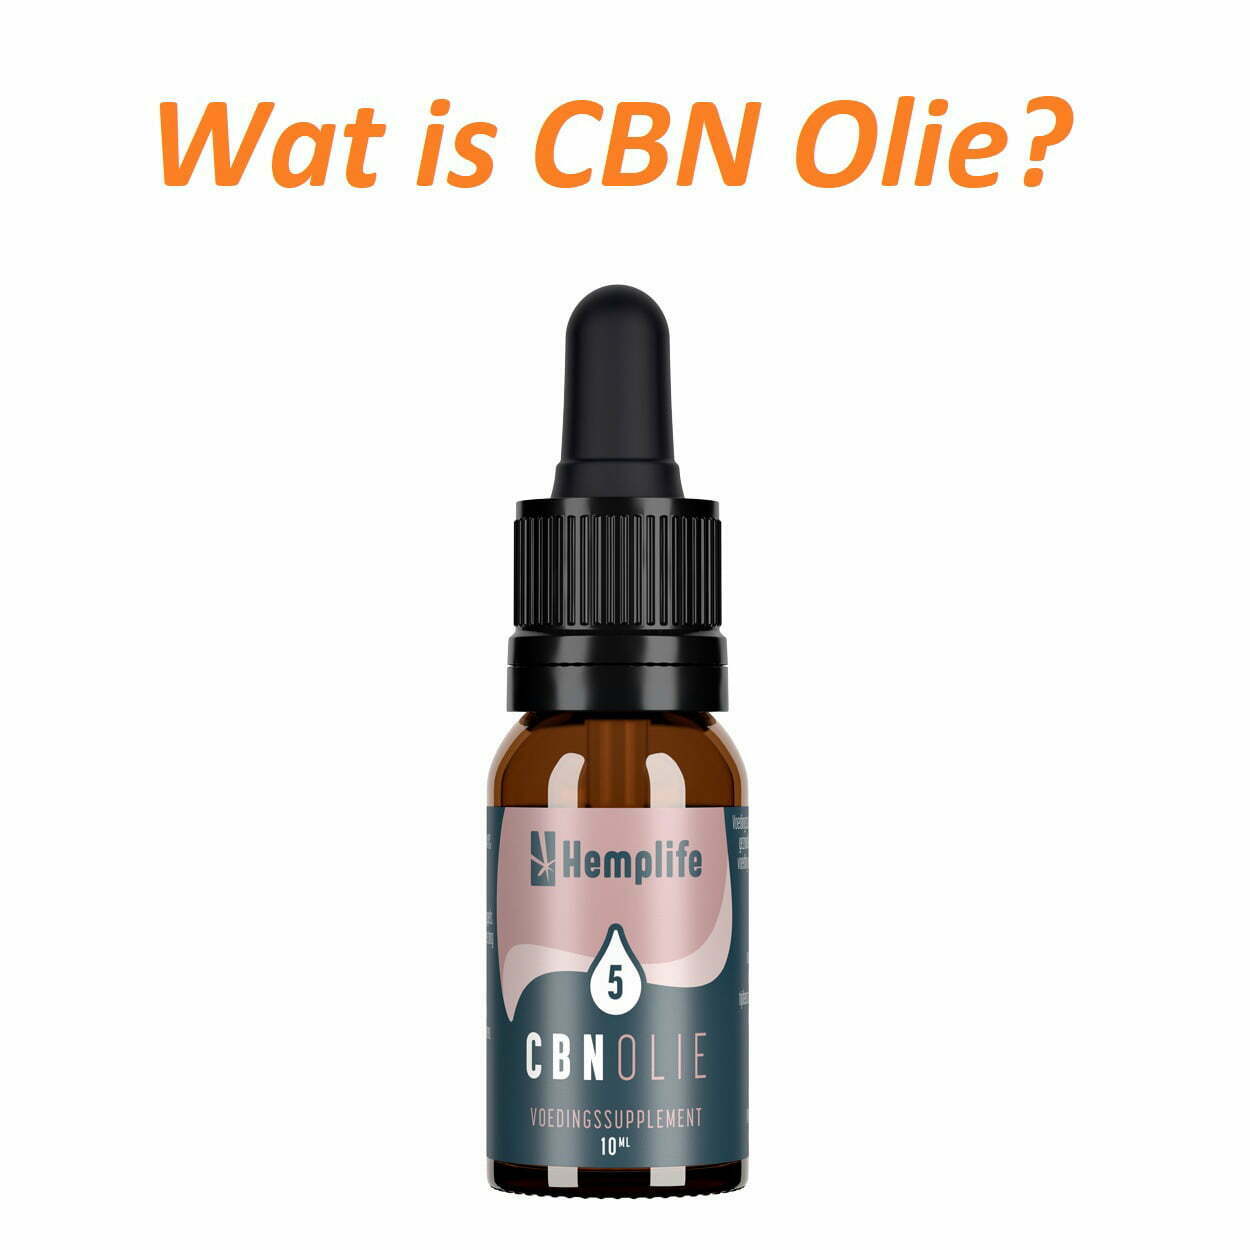 wat is CBN olie?